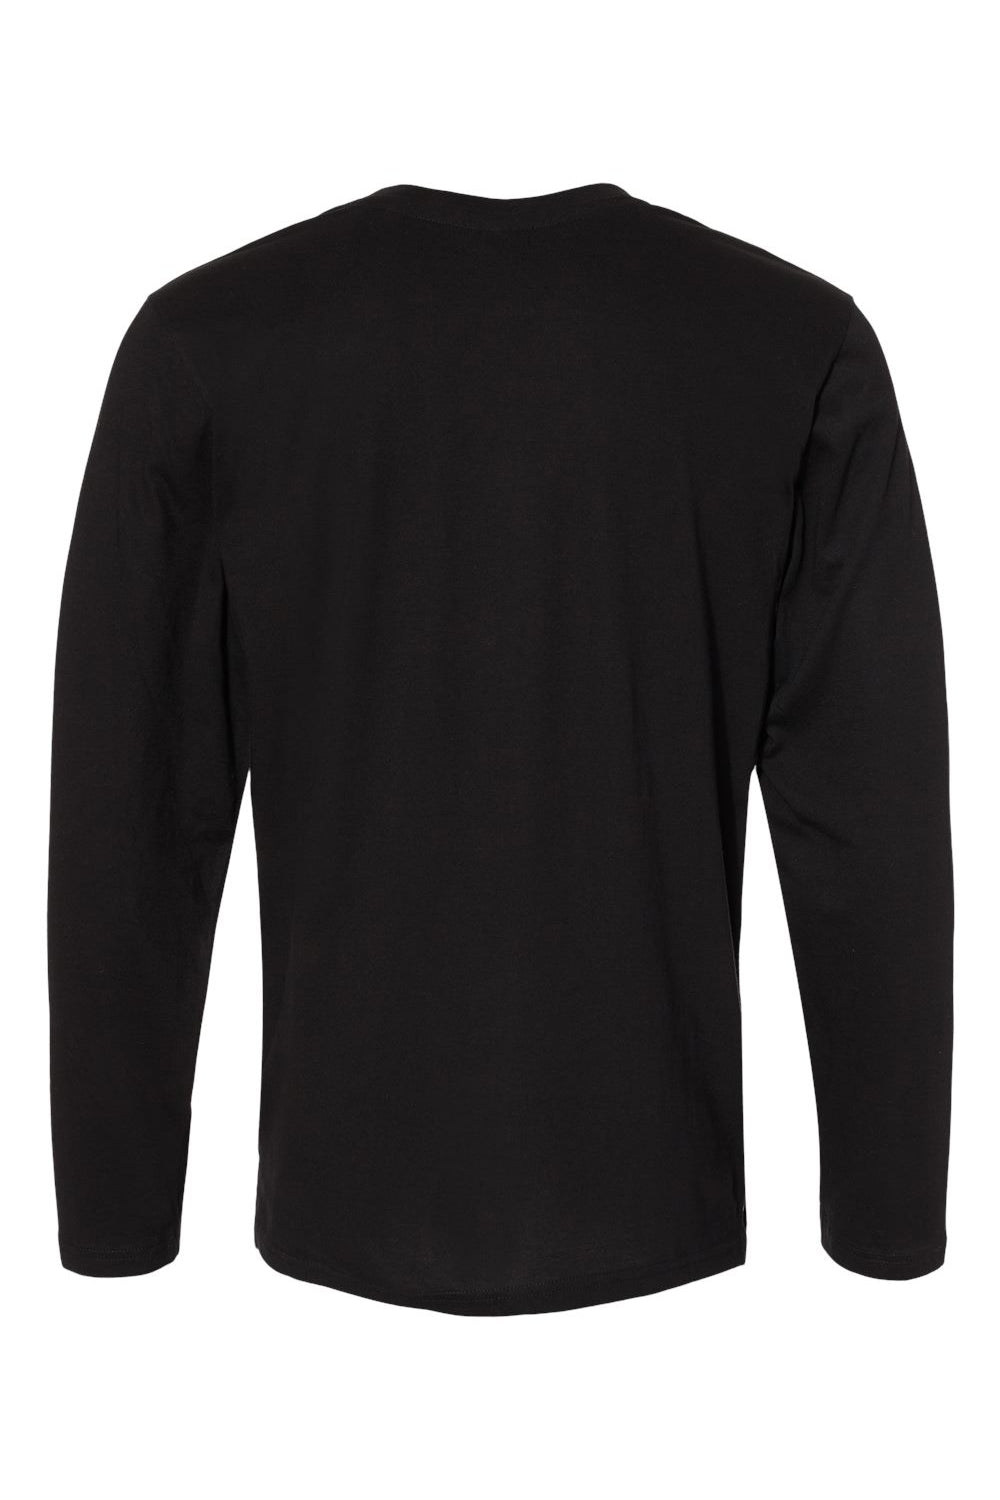 LAT 6918 Mens Fine Jersey Long Sleeve Crewneck T-Shirt Black Flat Back